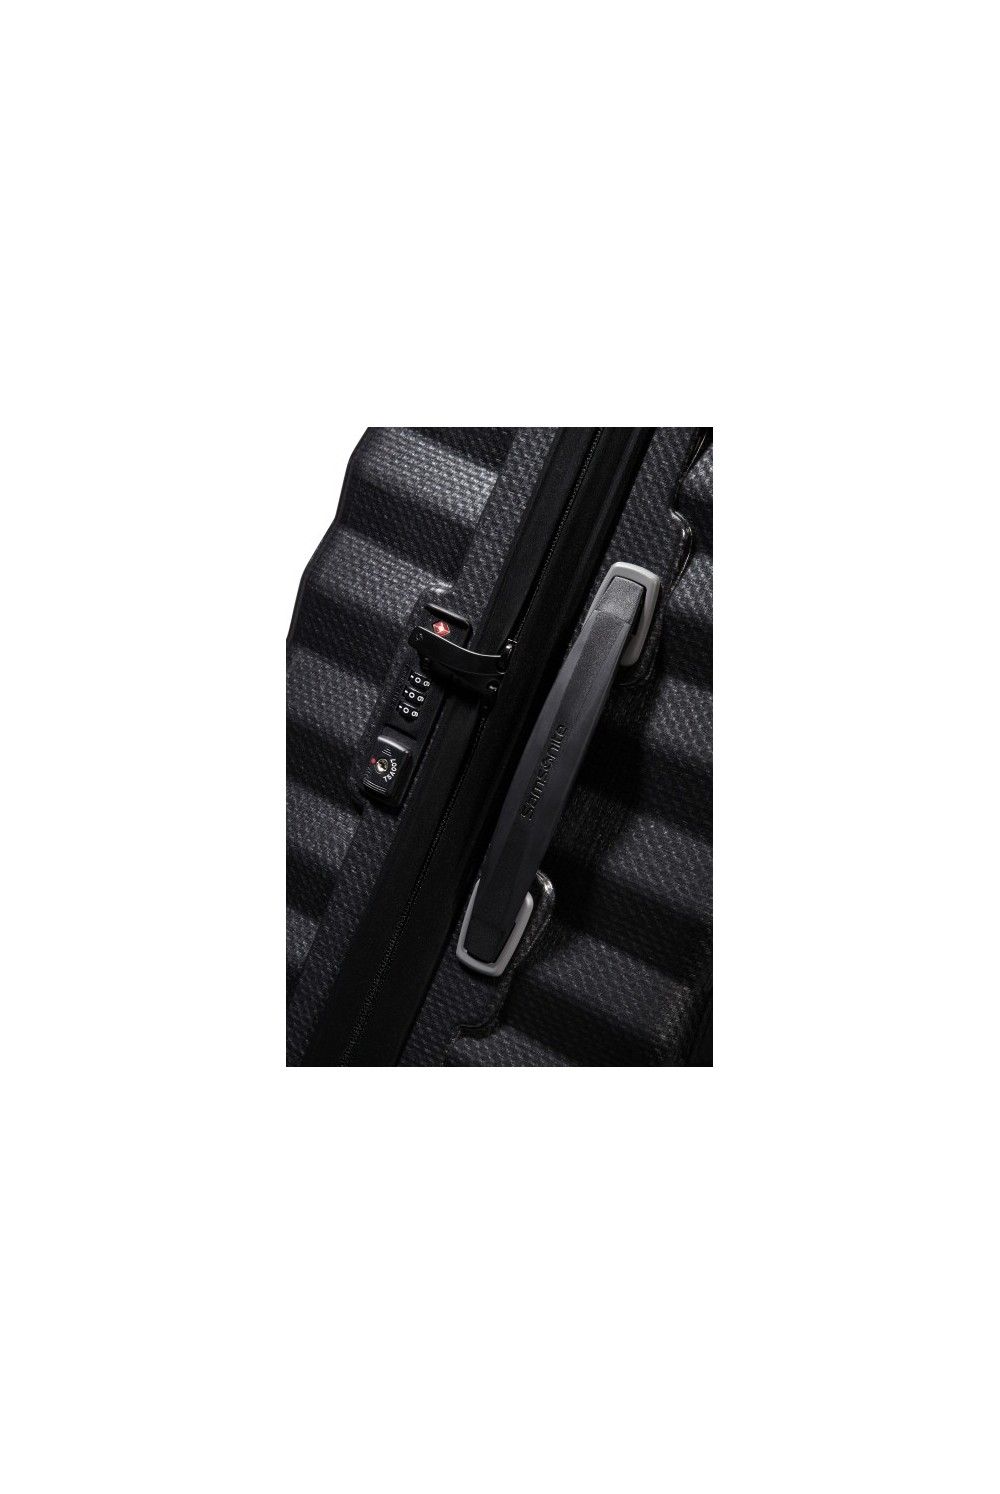 Samsonite Suitcase Lite Shock 81cm 124Liter 4 Wheel Black